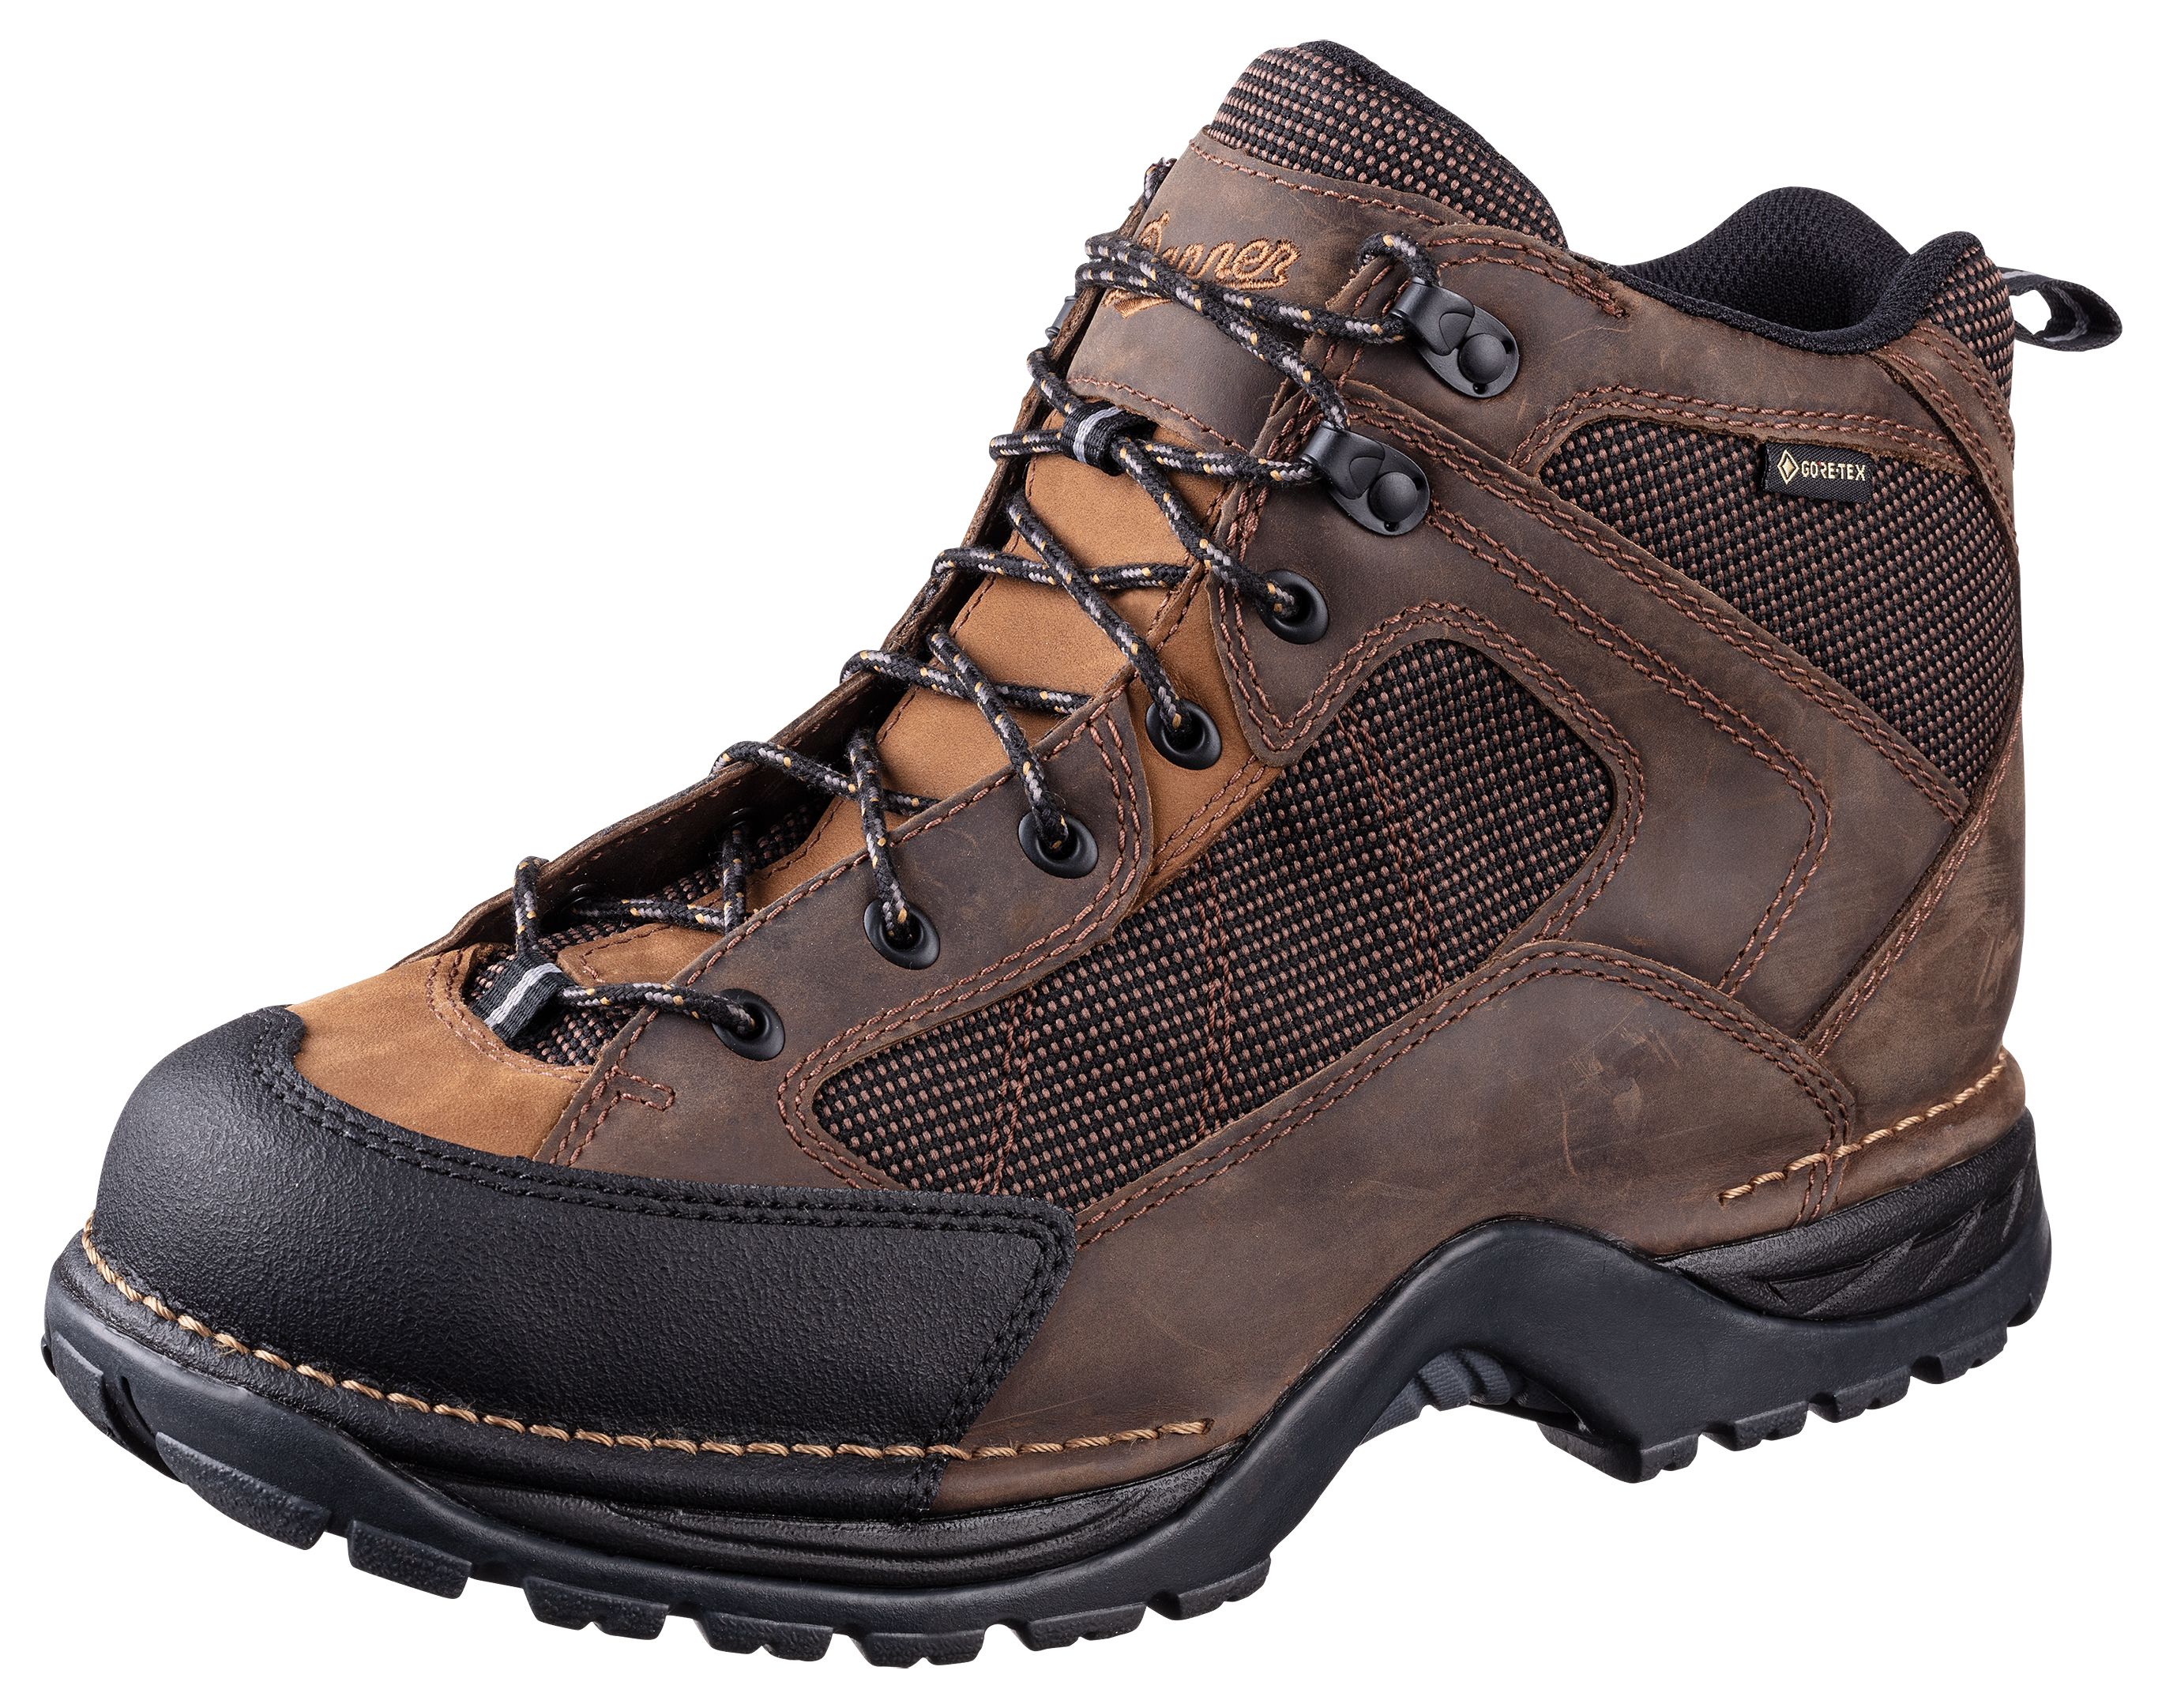 Danner Radical 452 GORE-TEX Hiking Boots for Men - Dark Brown - 11W